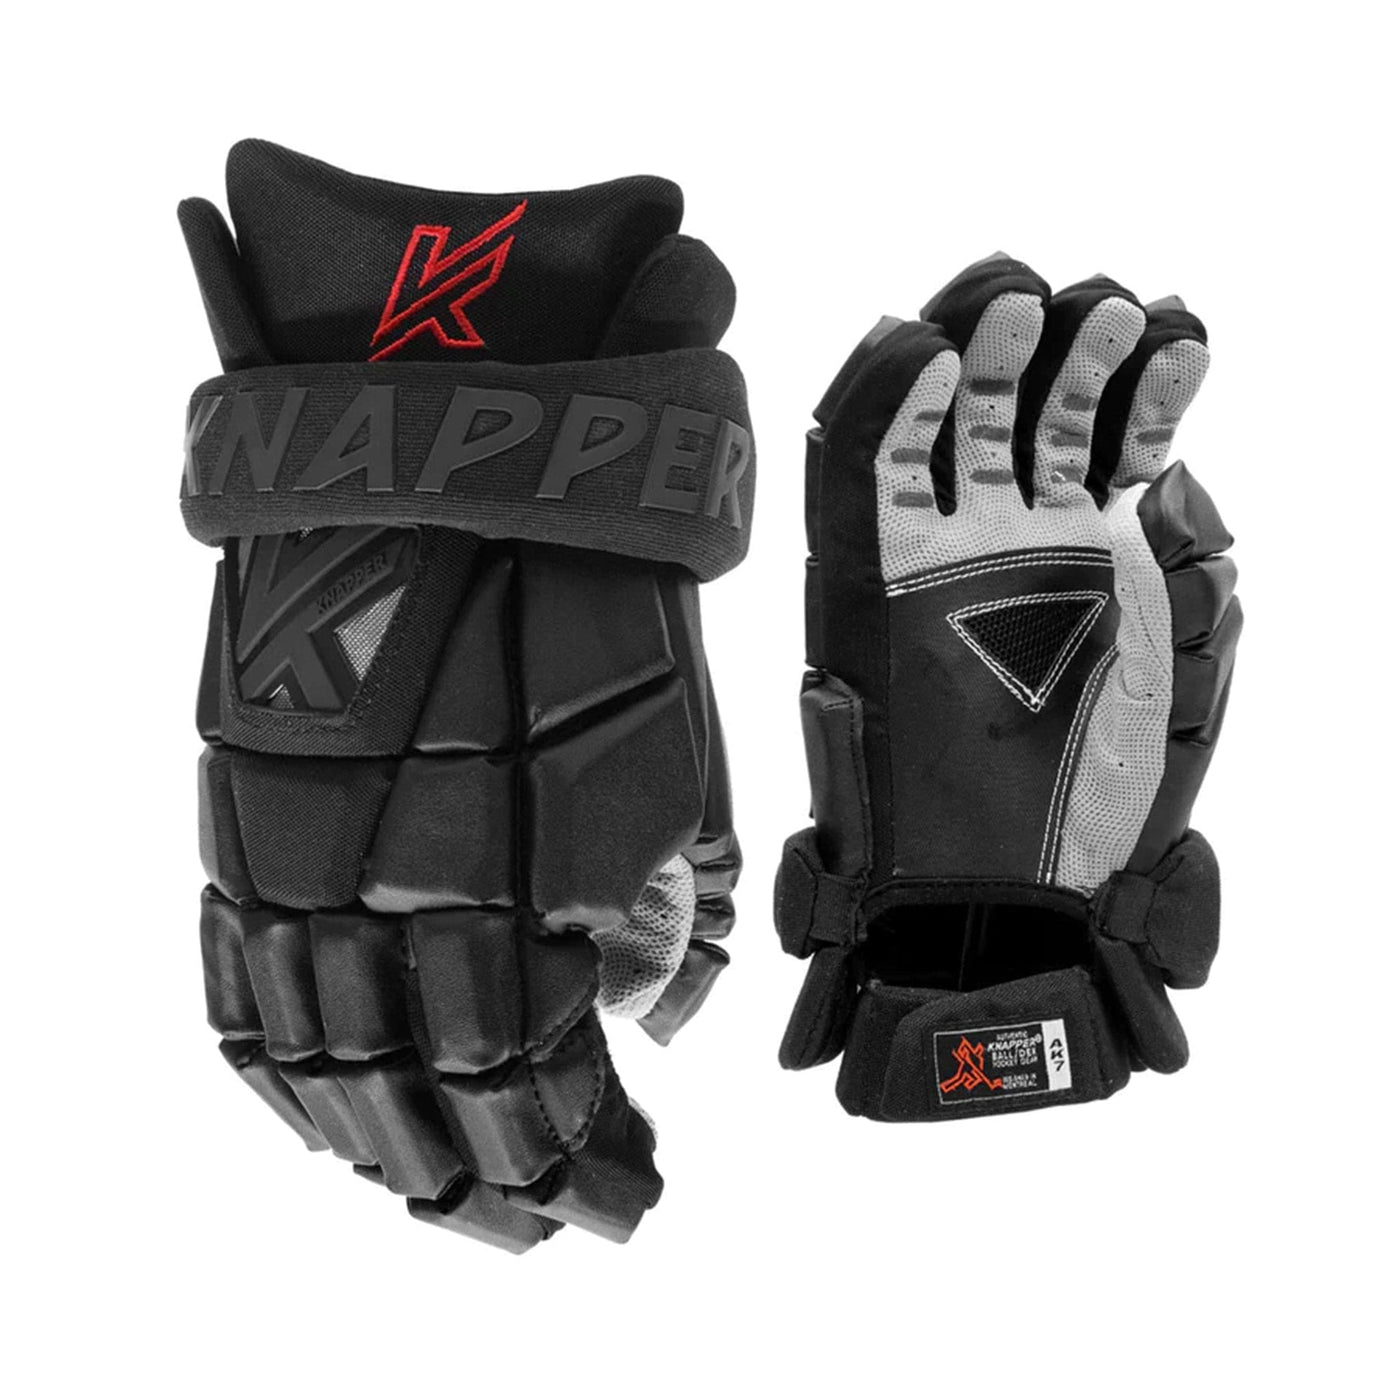 Knapper AK7-Pro Ball Hockey Gloves - The Hockey Shop Source For Sports